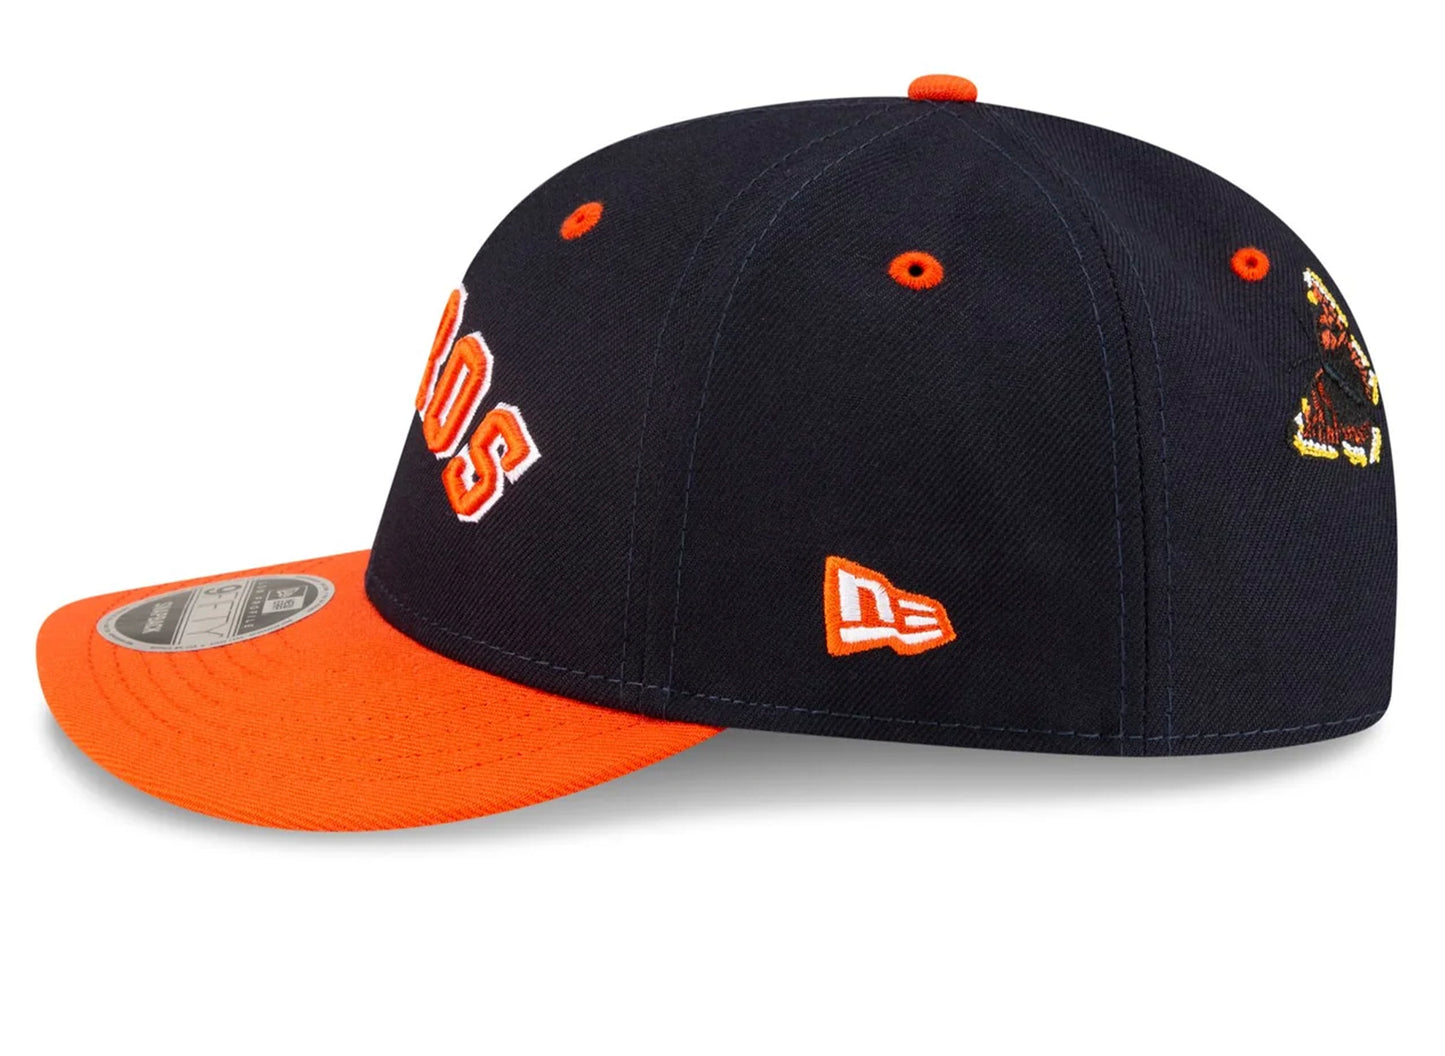 New Era x Felt Houston Astros Low Profile 9FIFTY Snapback Hat